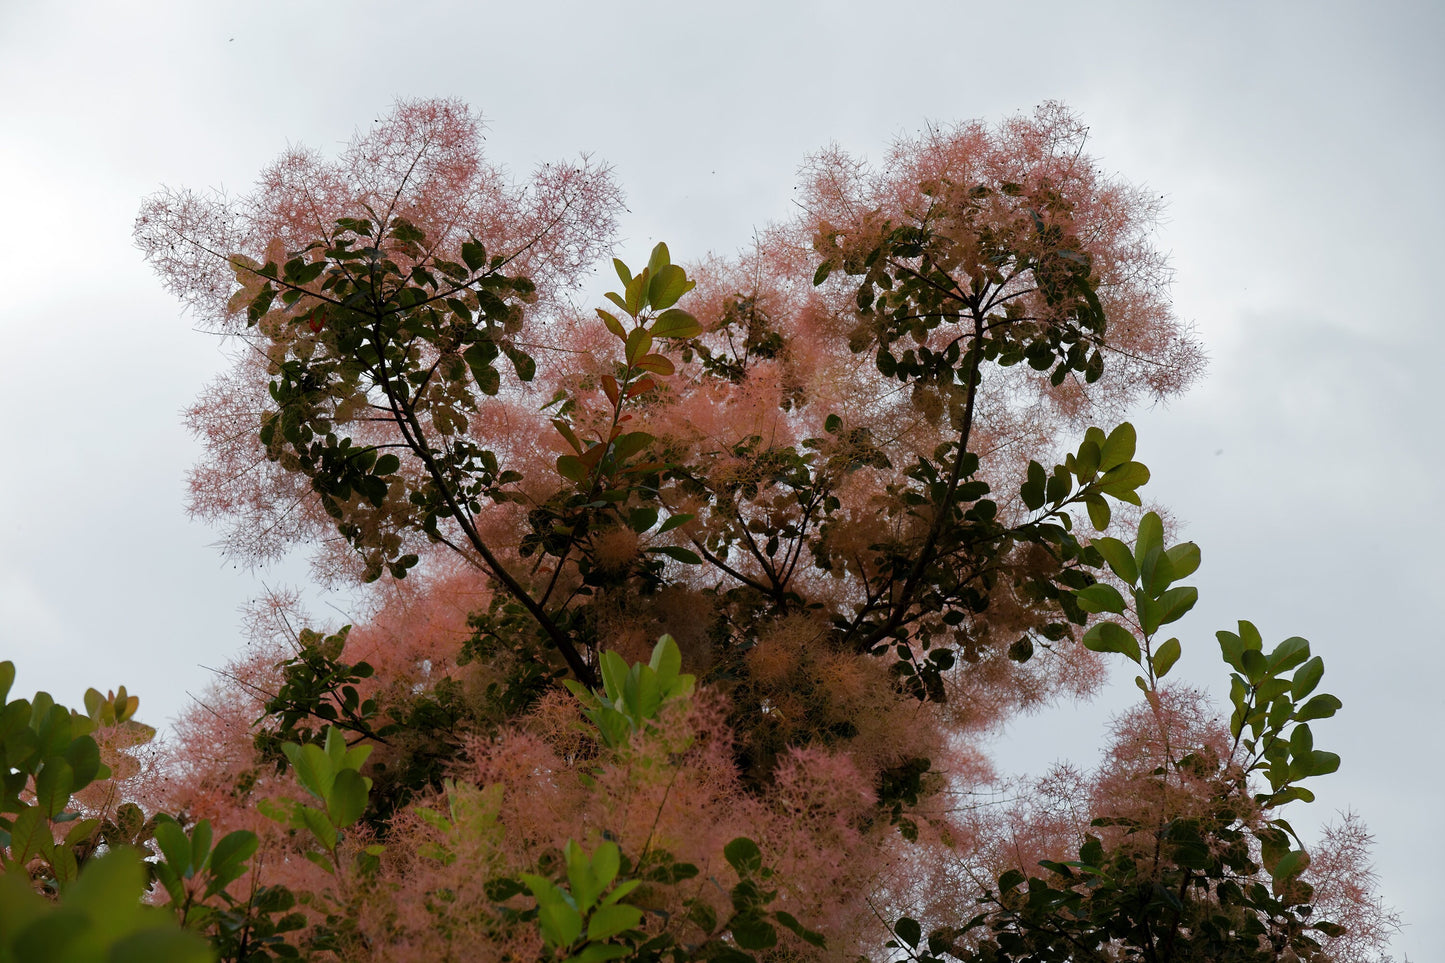 Cotinus Coggygria * Smoke Tree * Smoke Bush * Ornamental Bonsai * 10 Seeds *